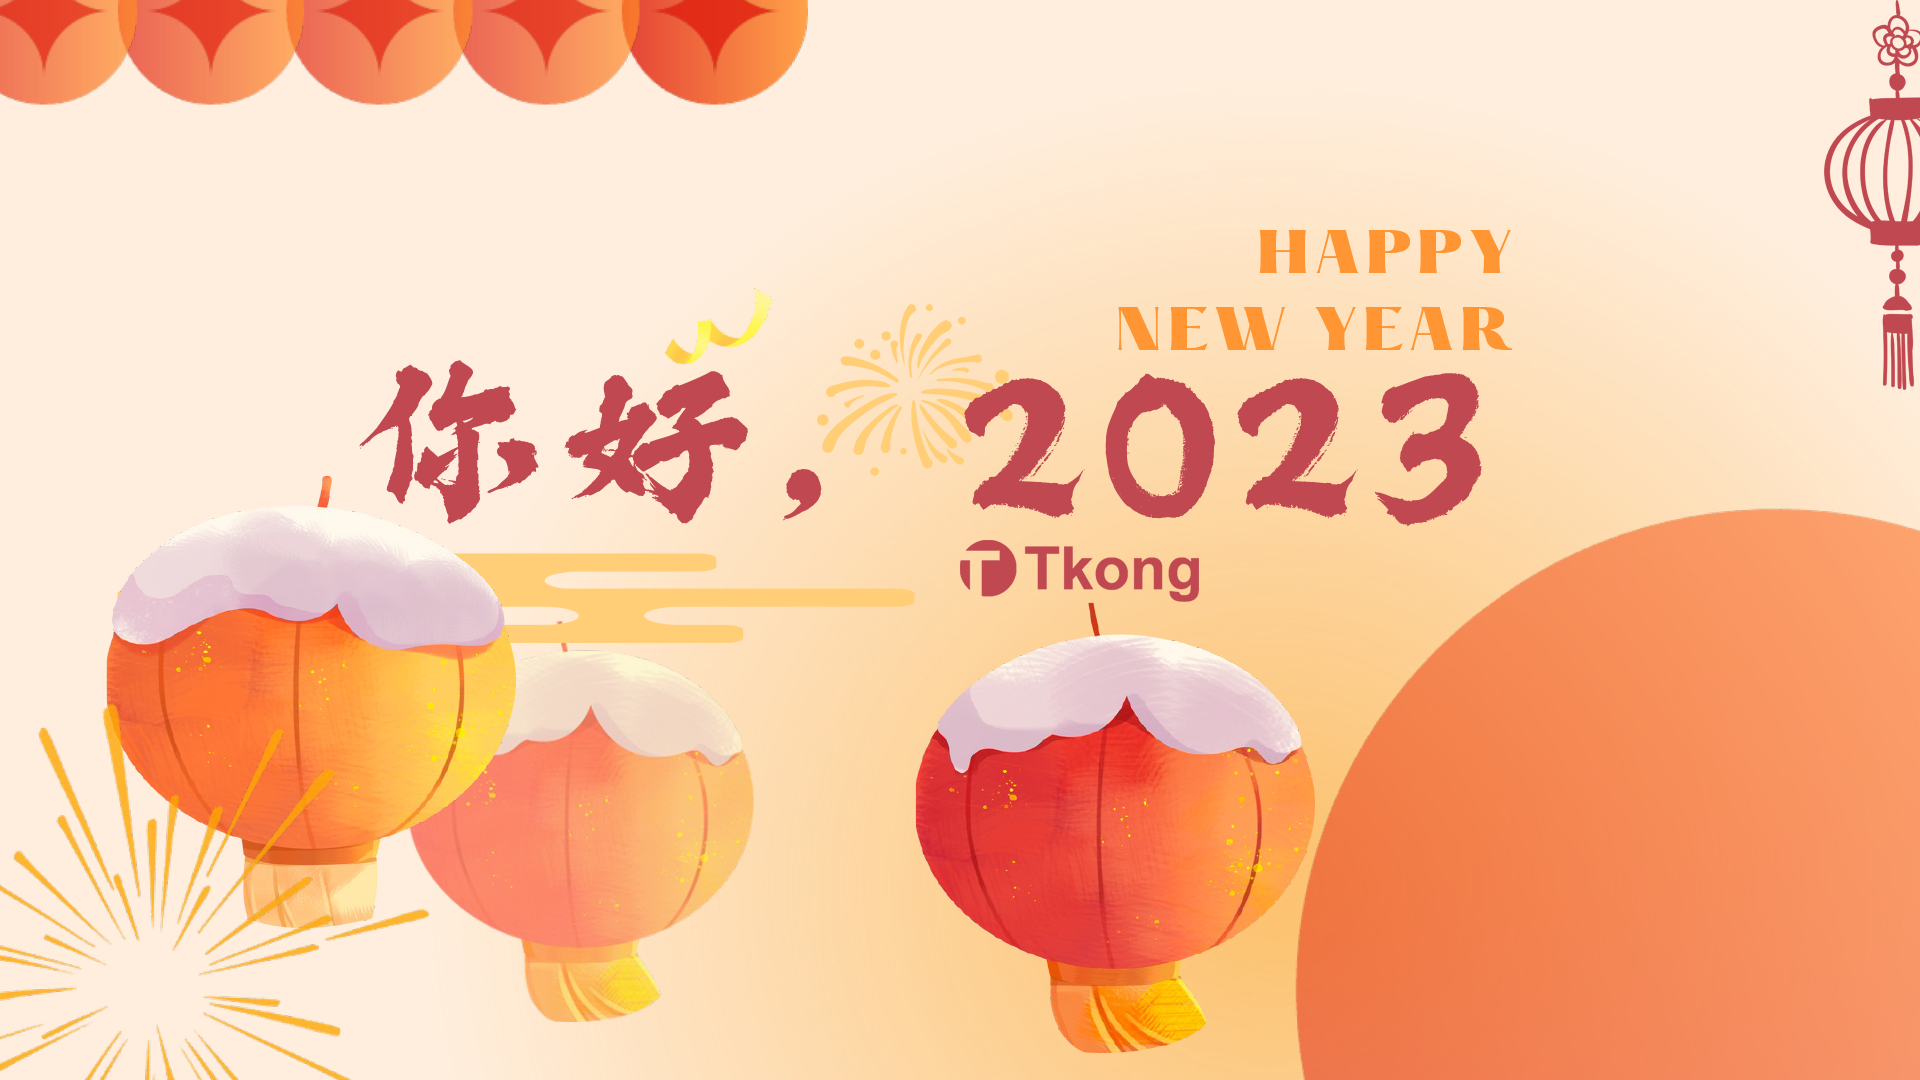 Tkong 的 2022年